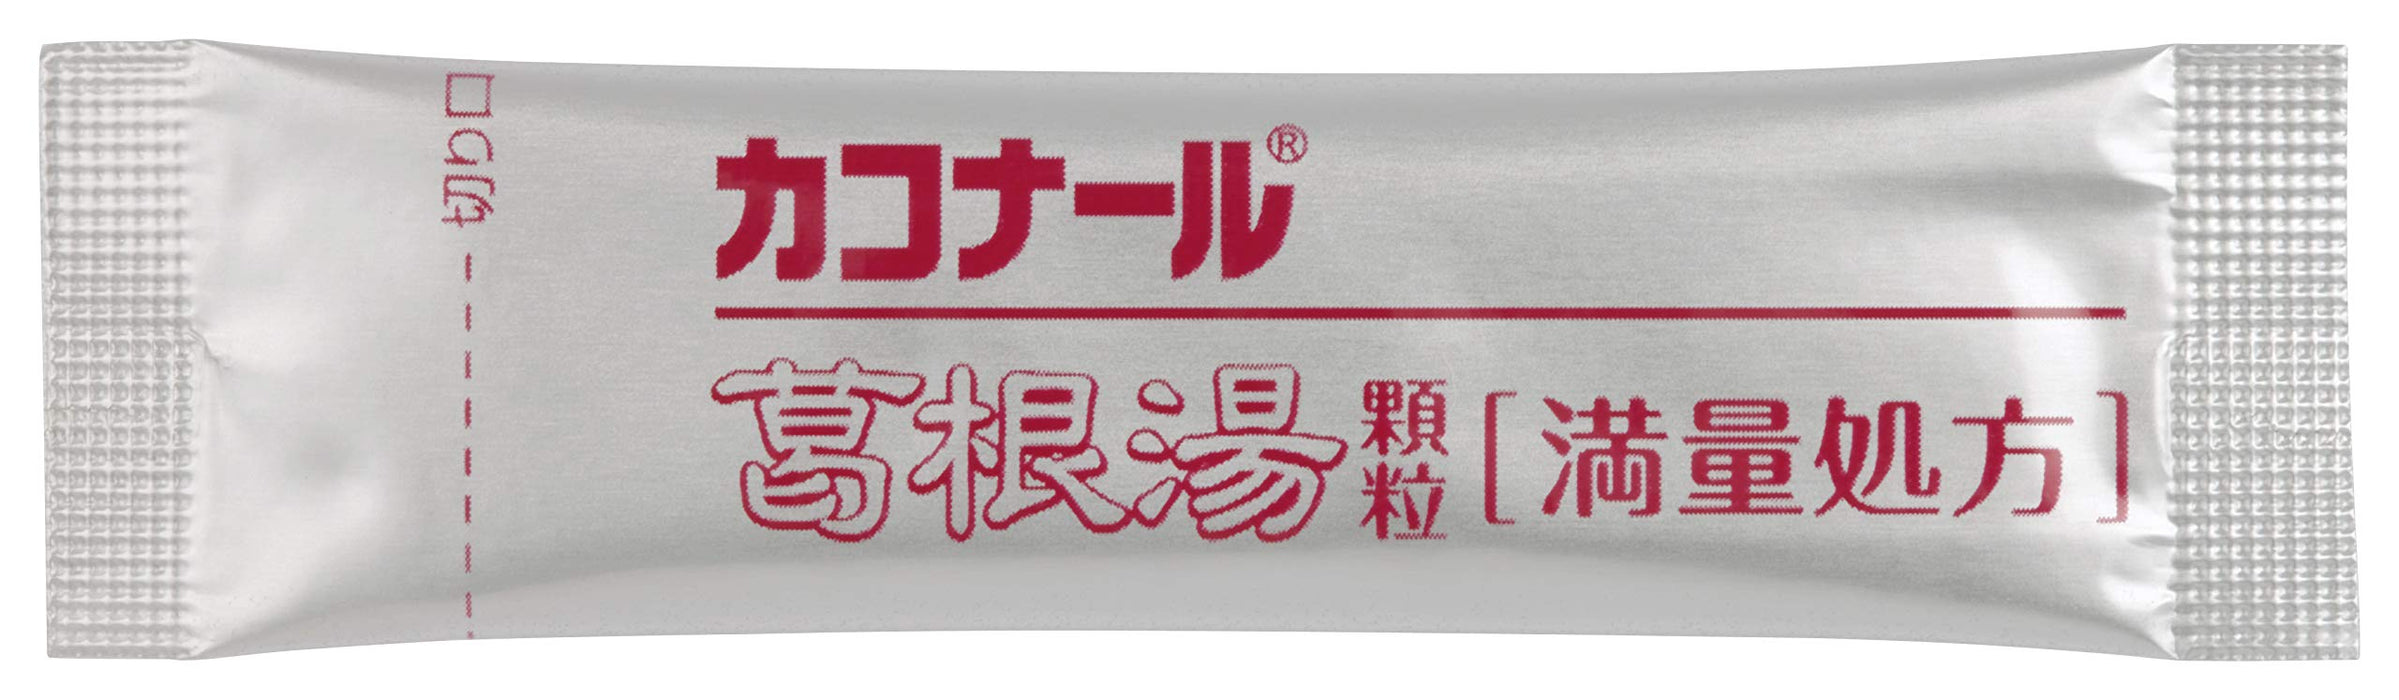 Kakonal Kakkonto 顆粒 12 包 - 第二類非處方藥 |卡科納爾|日本 - 全處方需繳納自我藥療稅